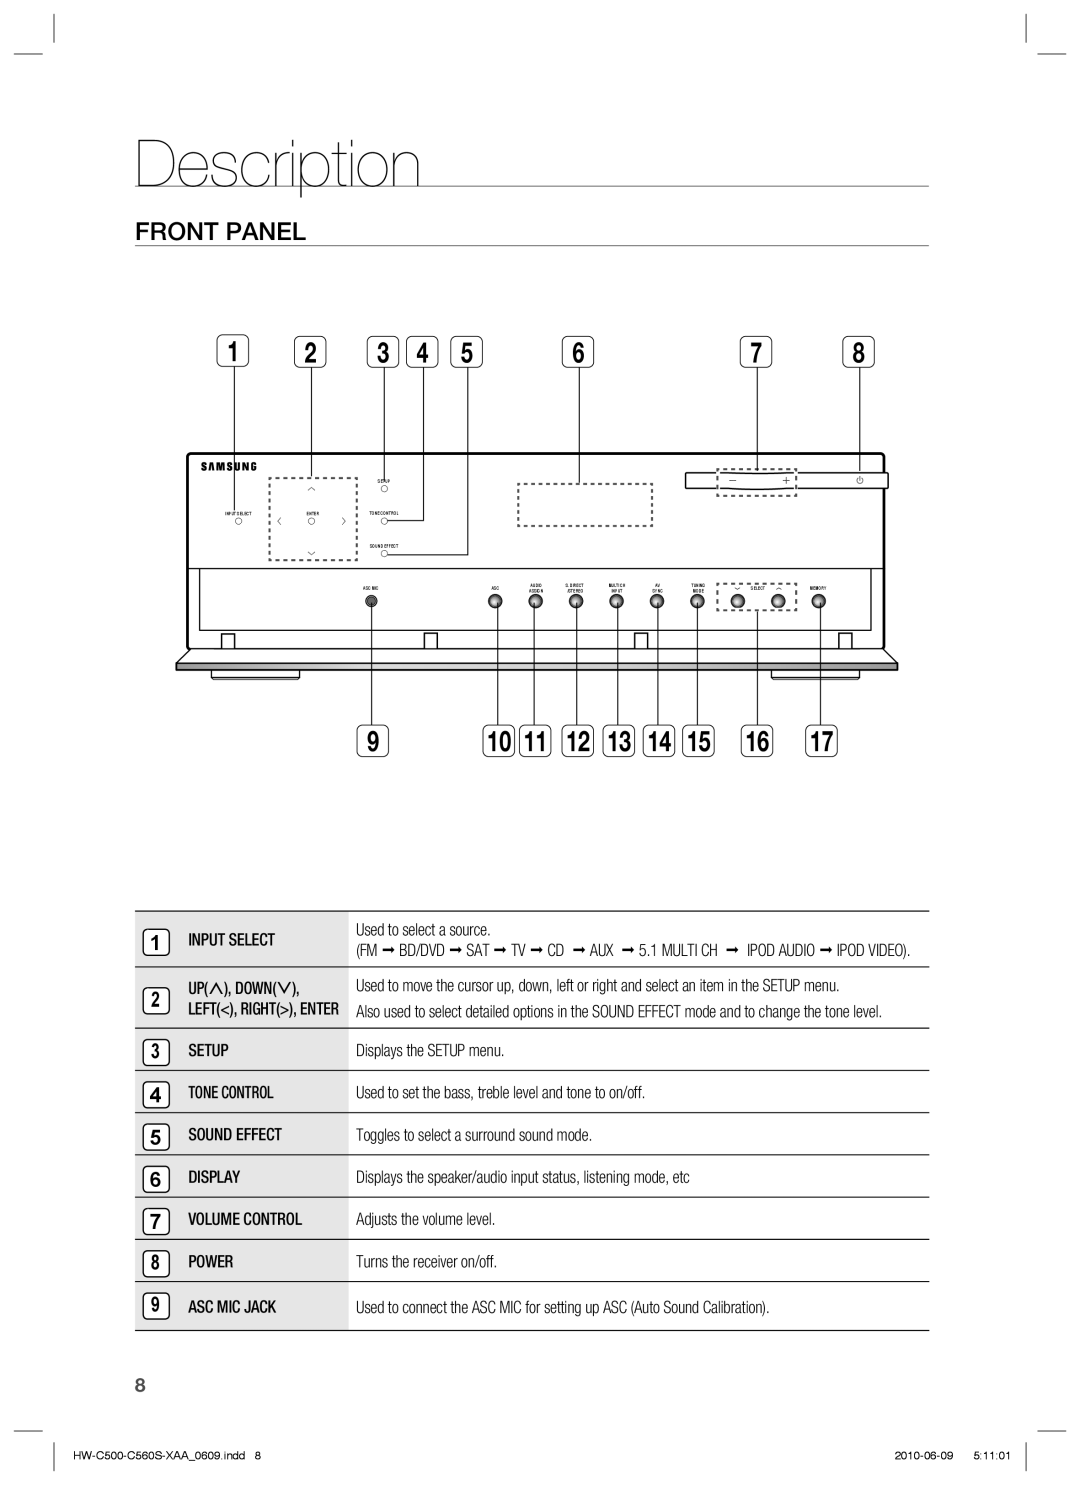 Samsung HW-C500, HW-C560S user manual Description, Front Panel 